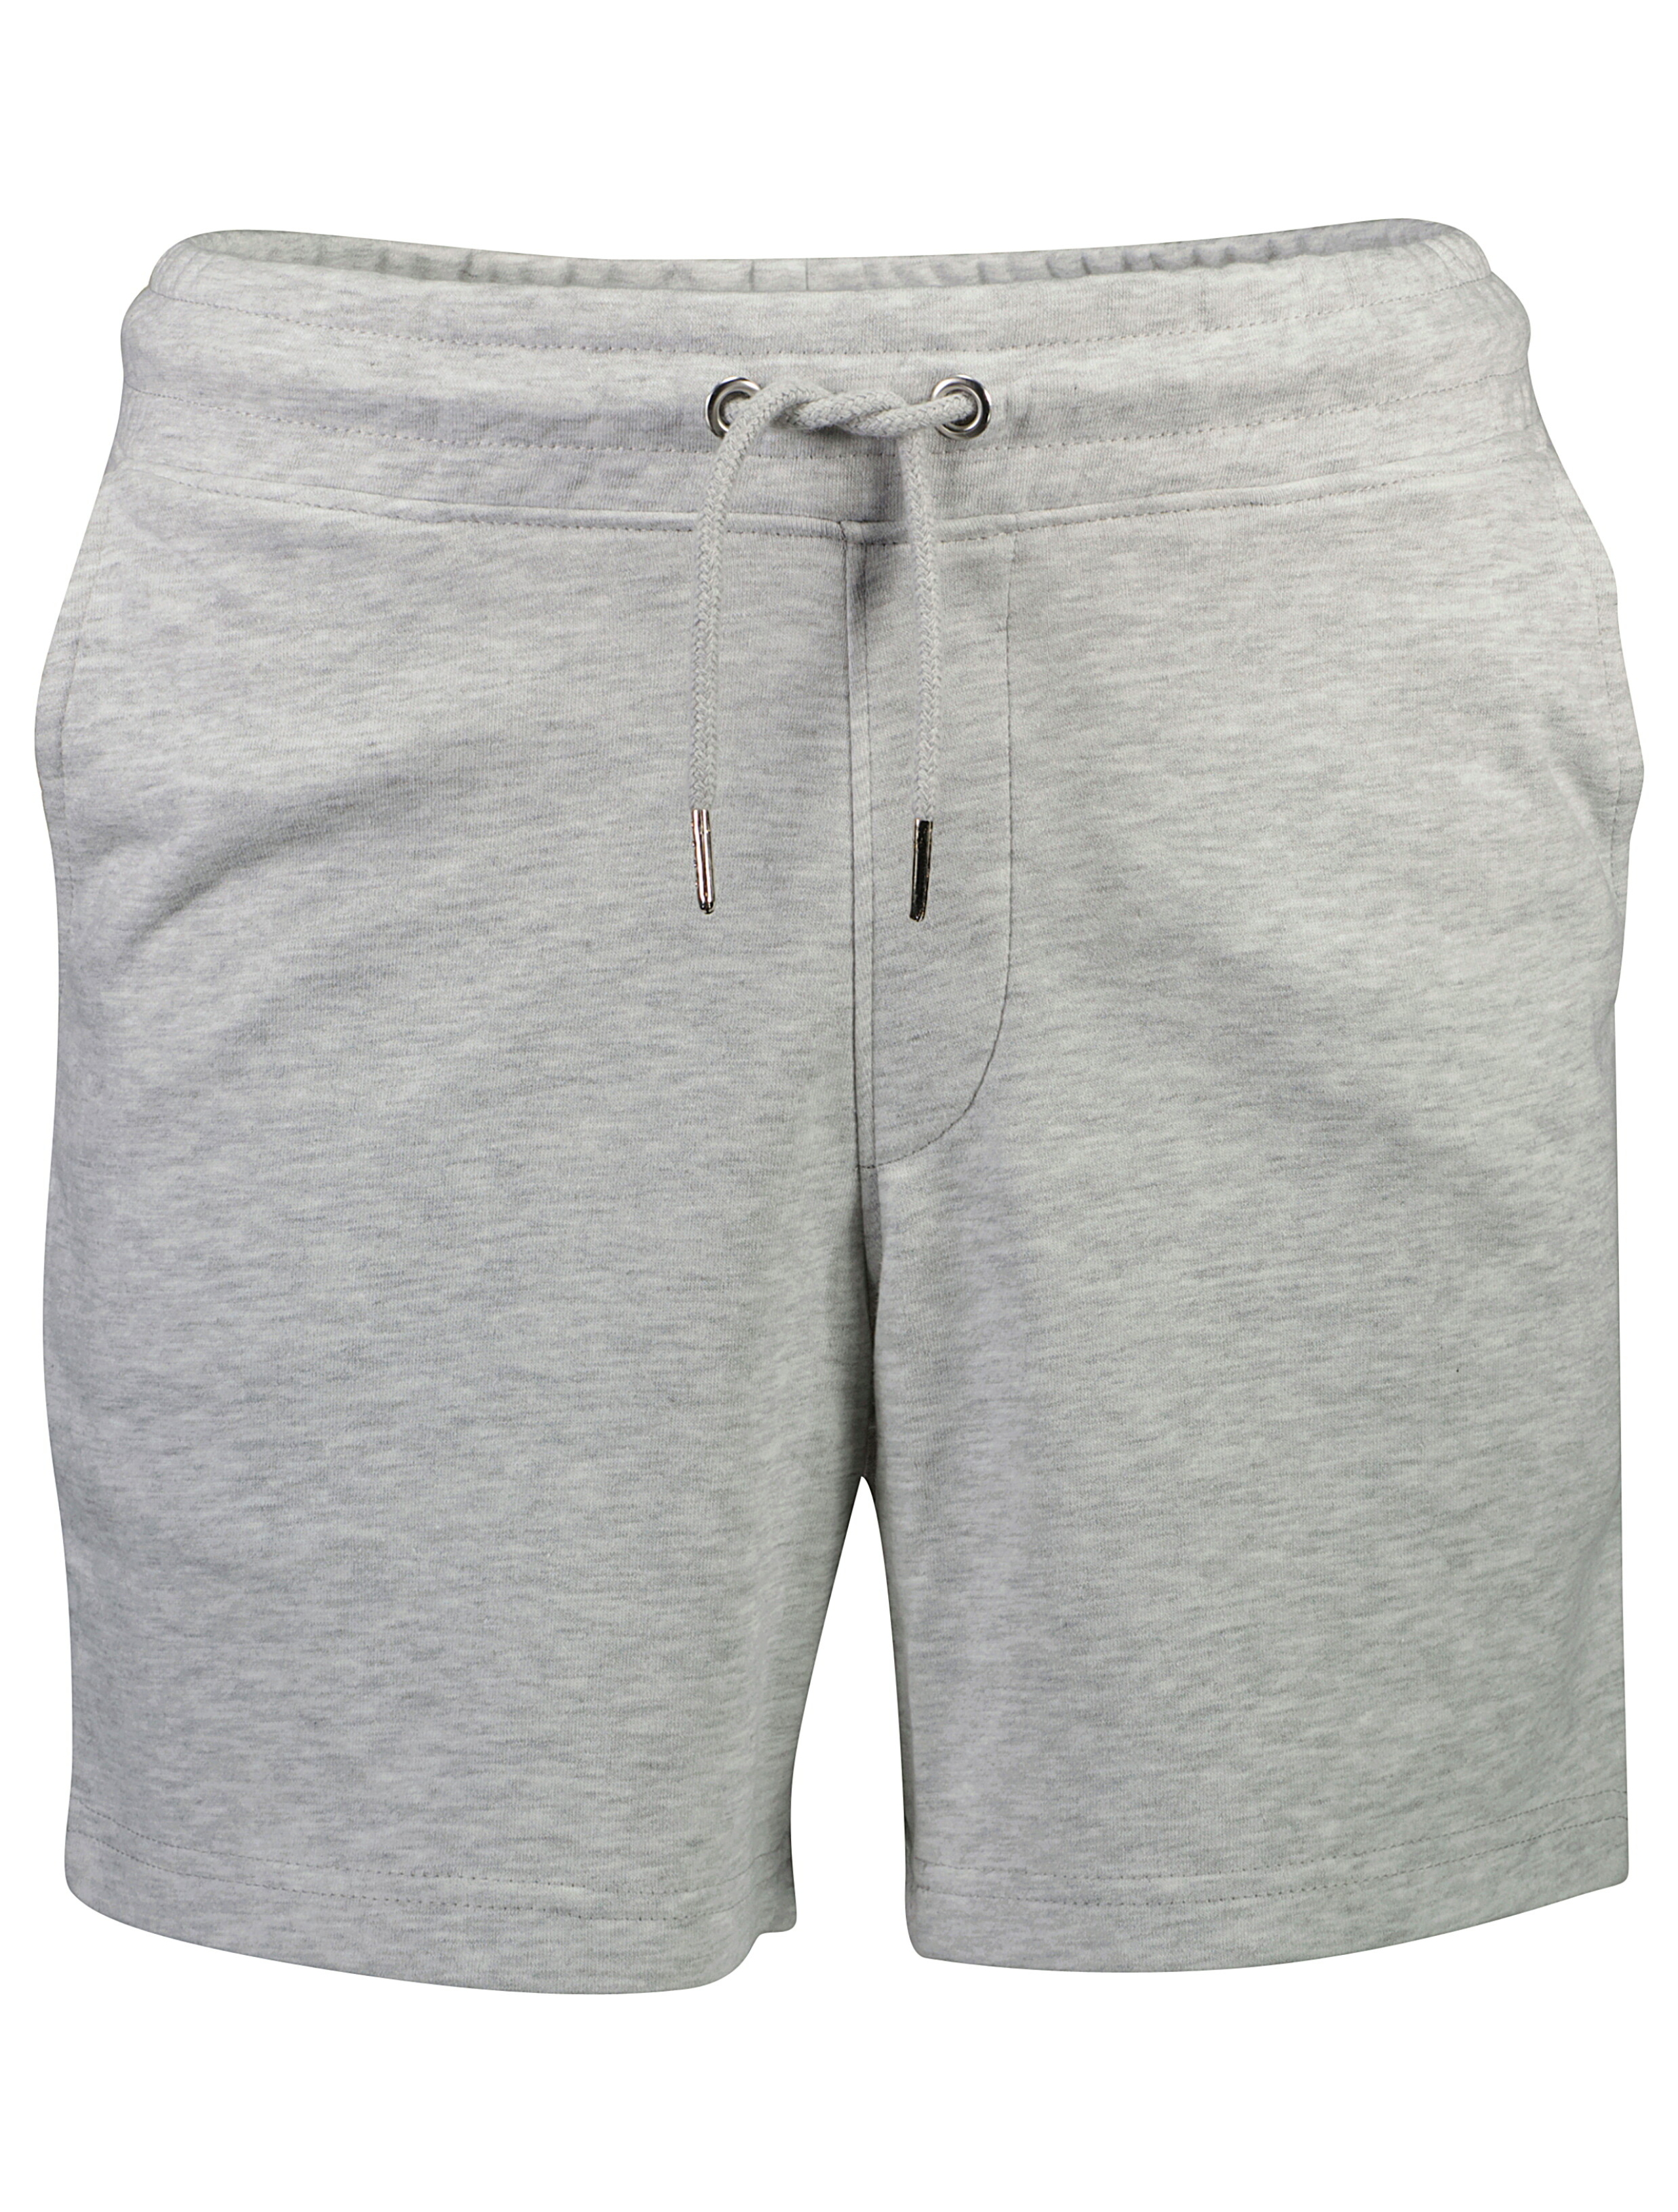 Shine Original Casual shorts grå / grey mel